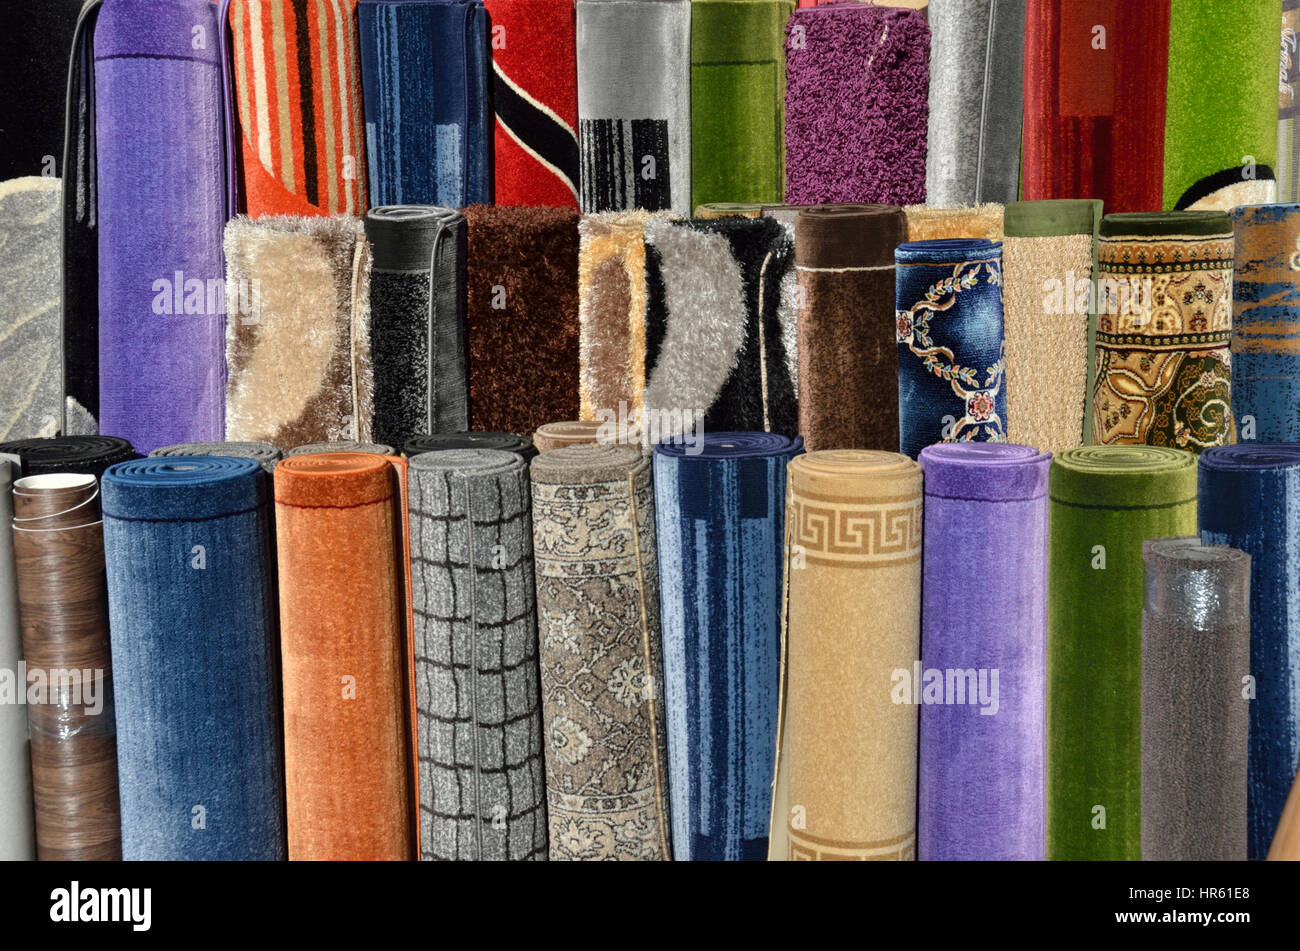 Carpet roll display Stock Photo - Alamy